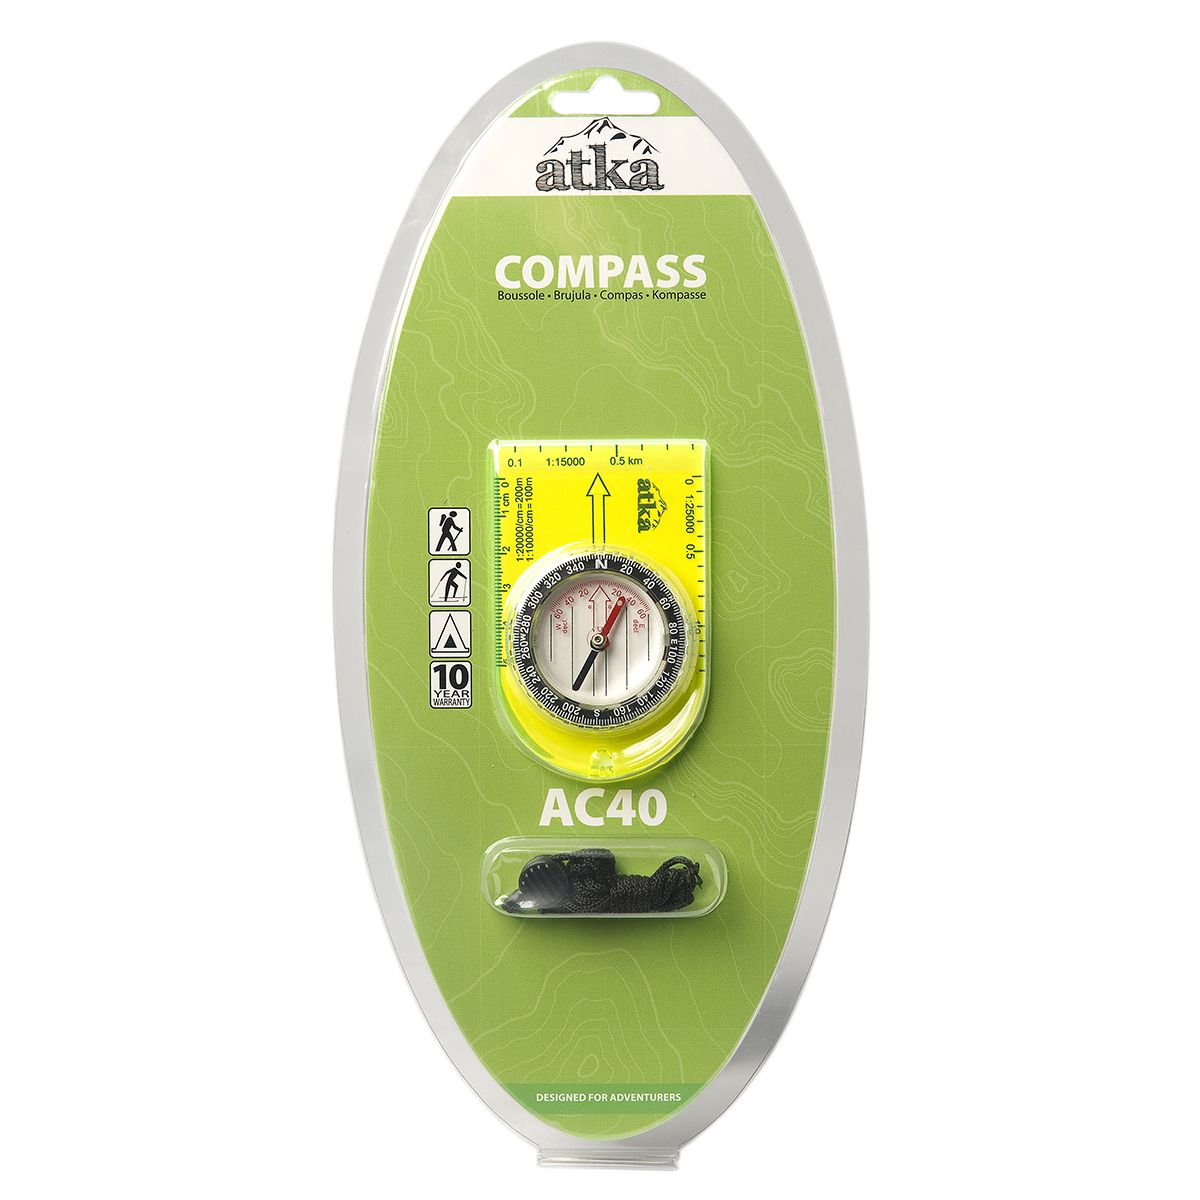 Atka AC40 Compact Baseplate Compass